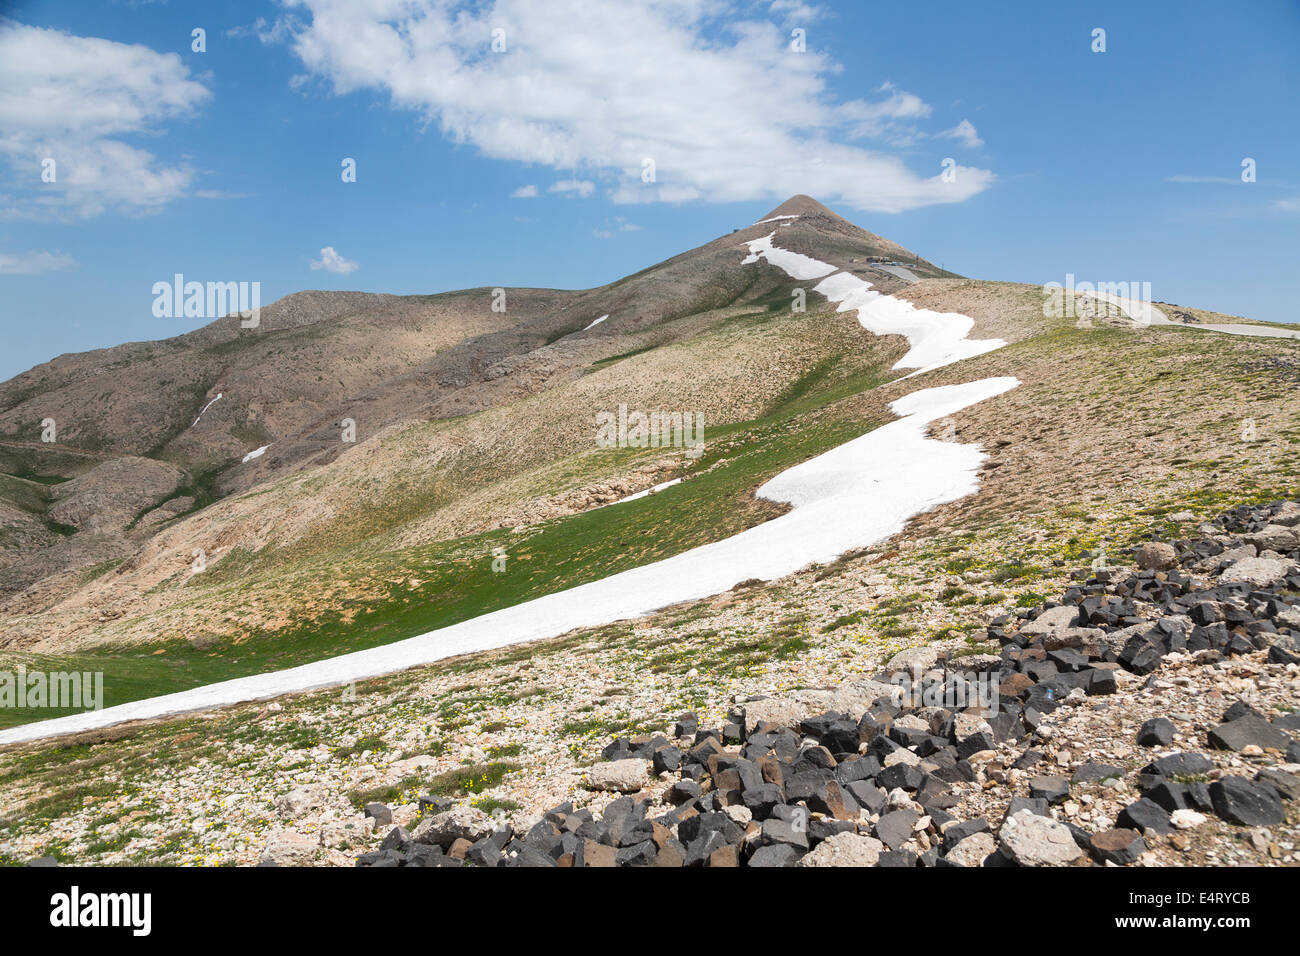 view towards summit of Nemrut or Nemrud Dagh, Anatolia, Turkey Stock Photo